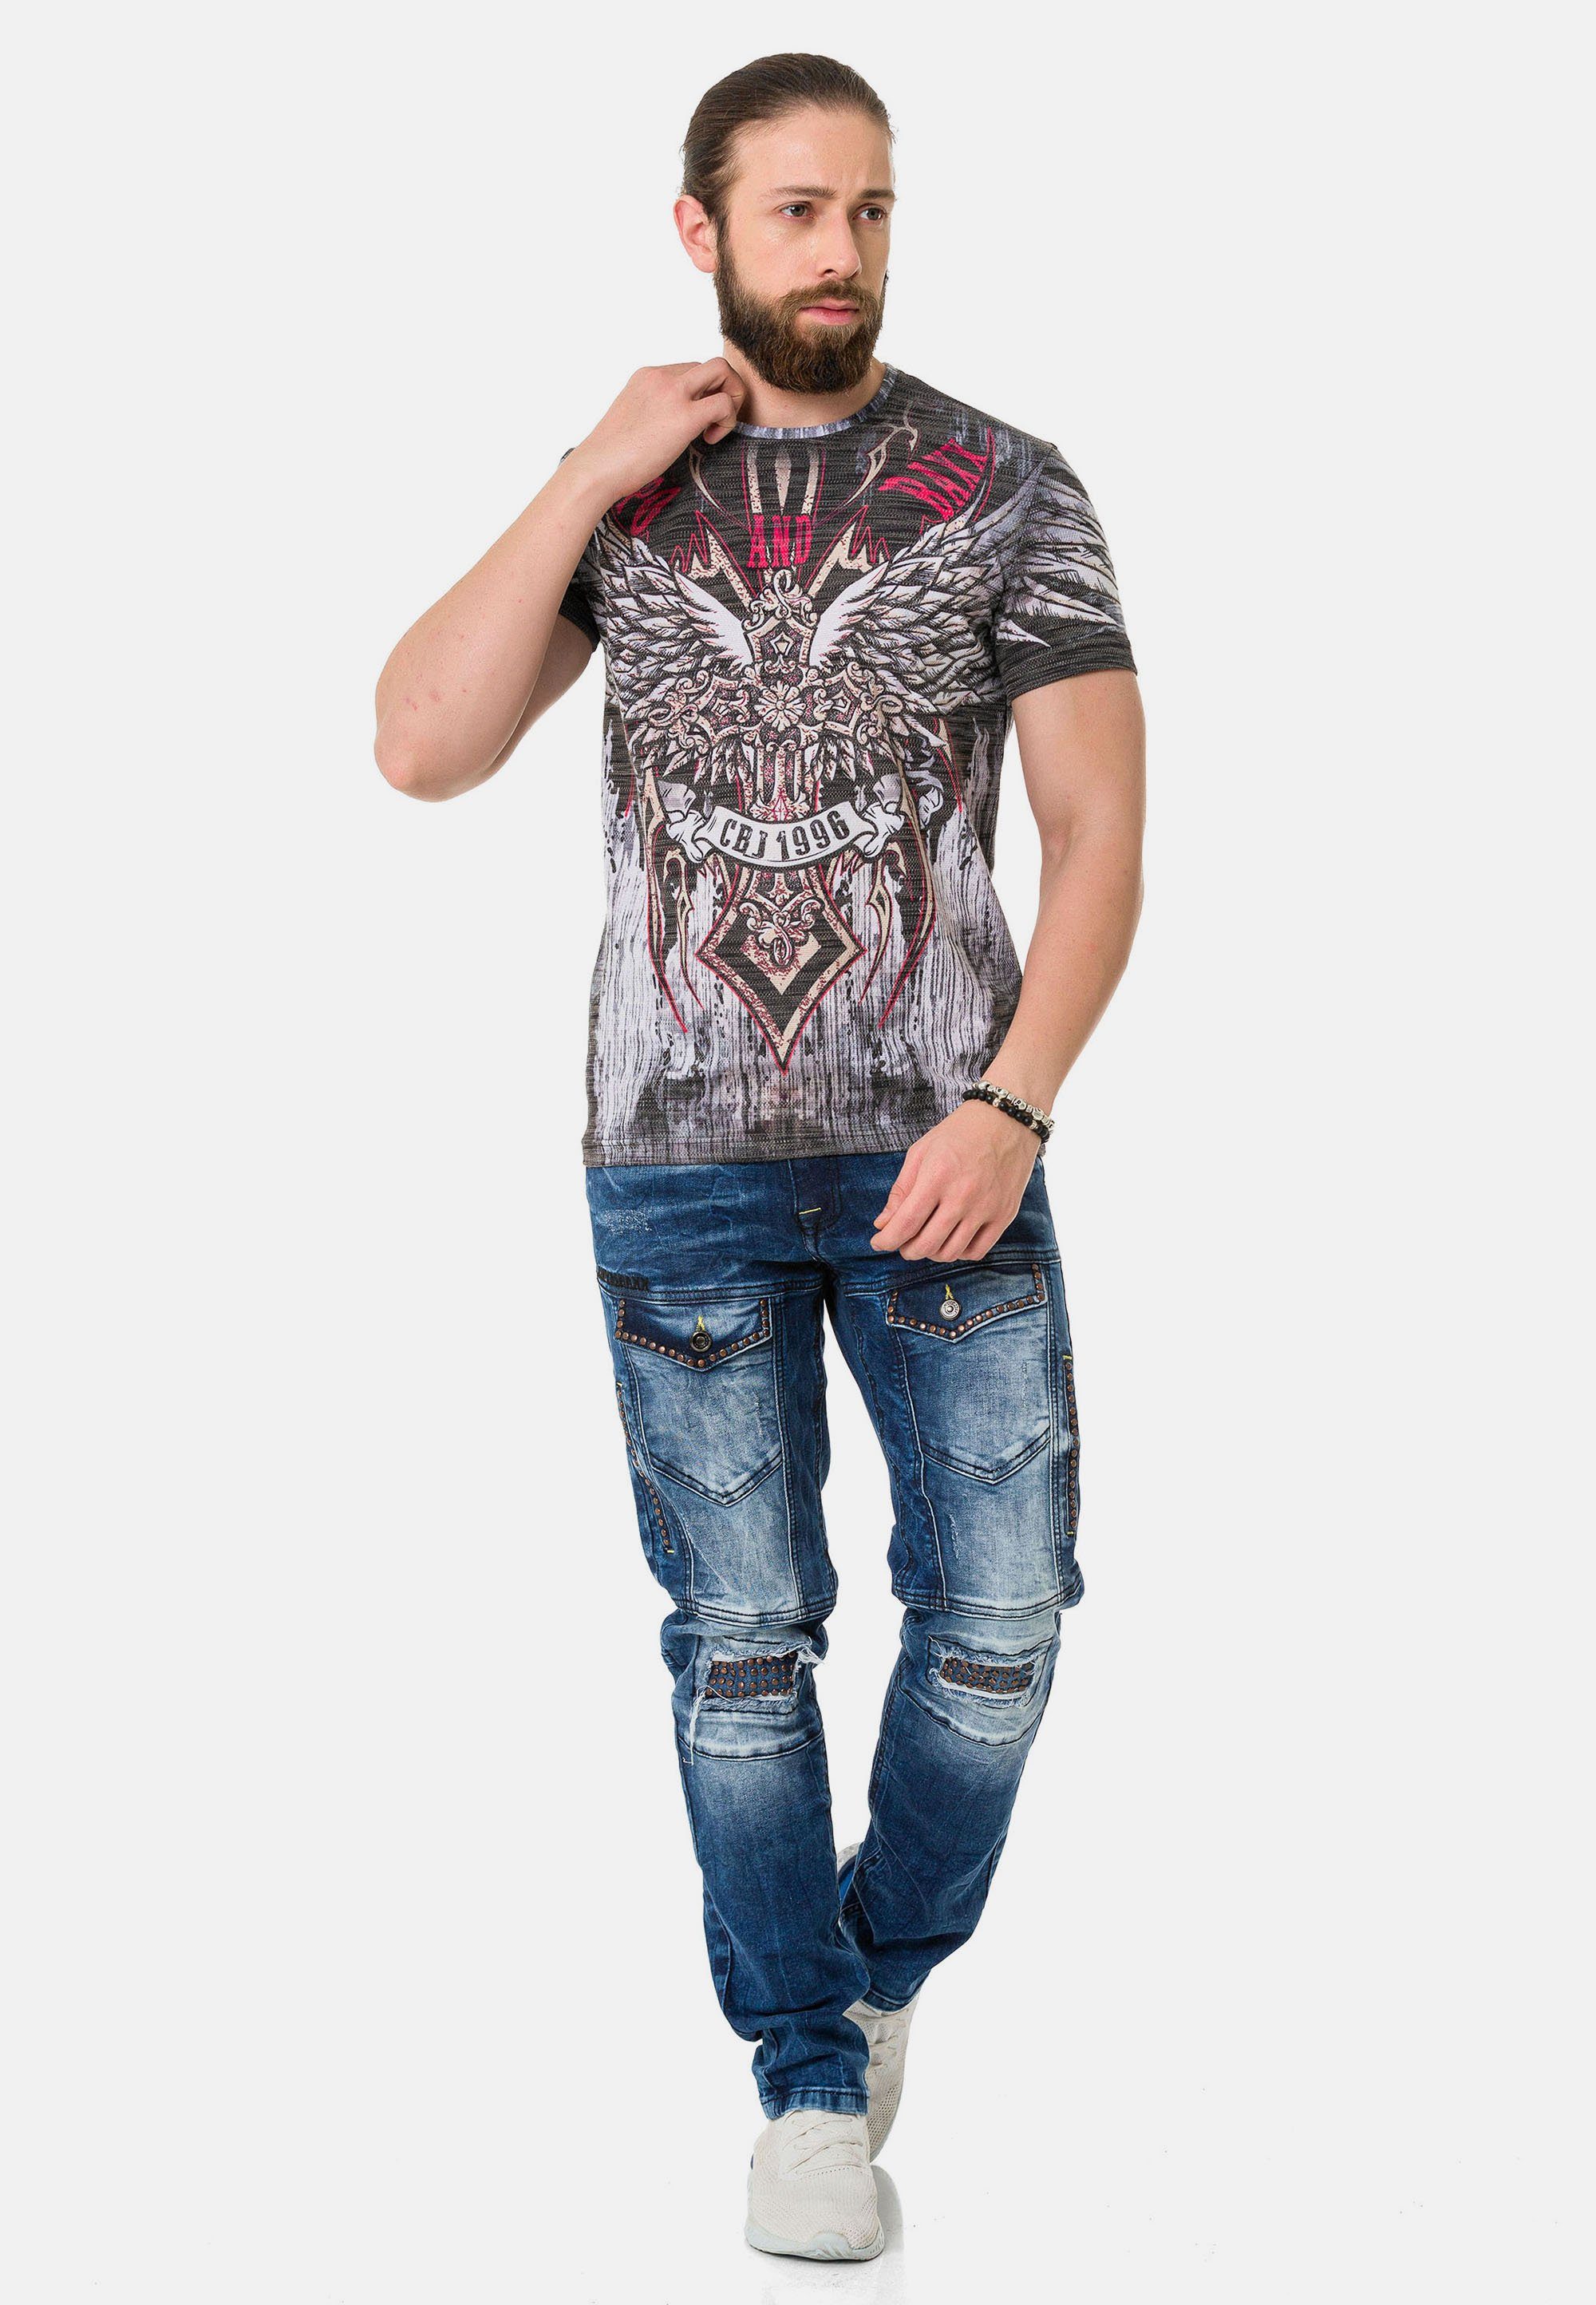 & Full-Print-Design trendigen T-Shirt Baxx im Cipo